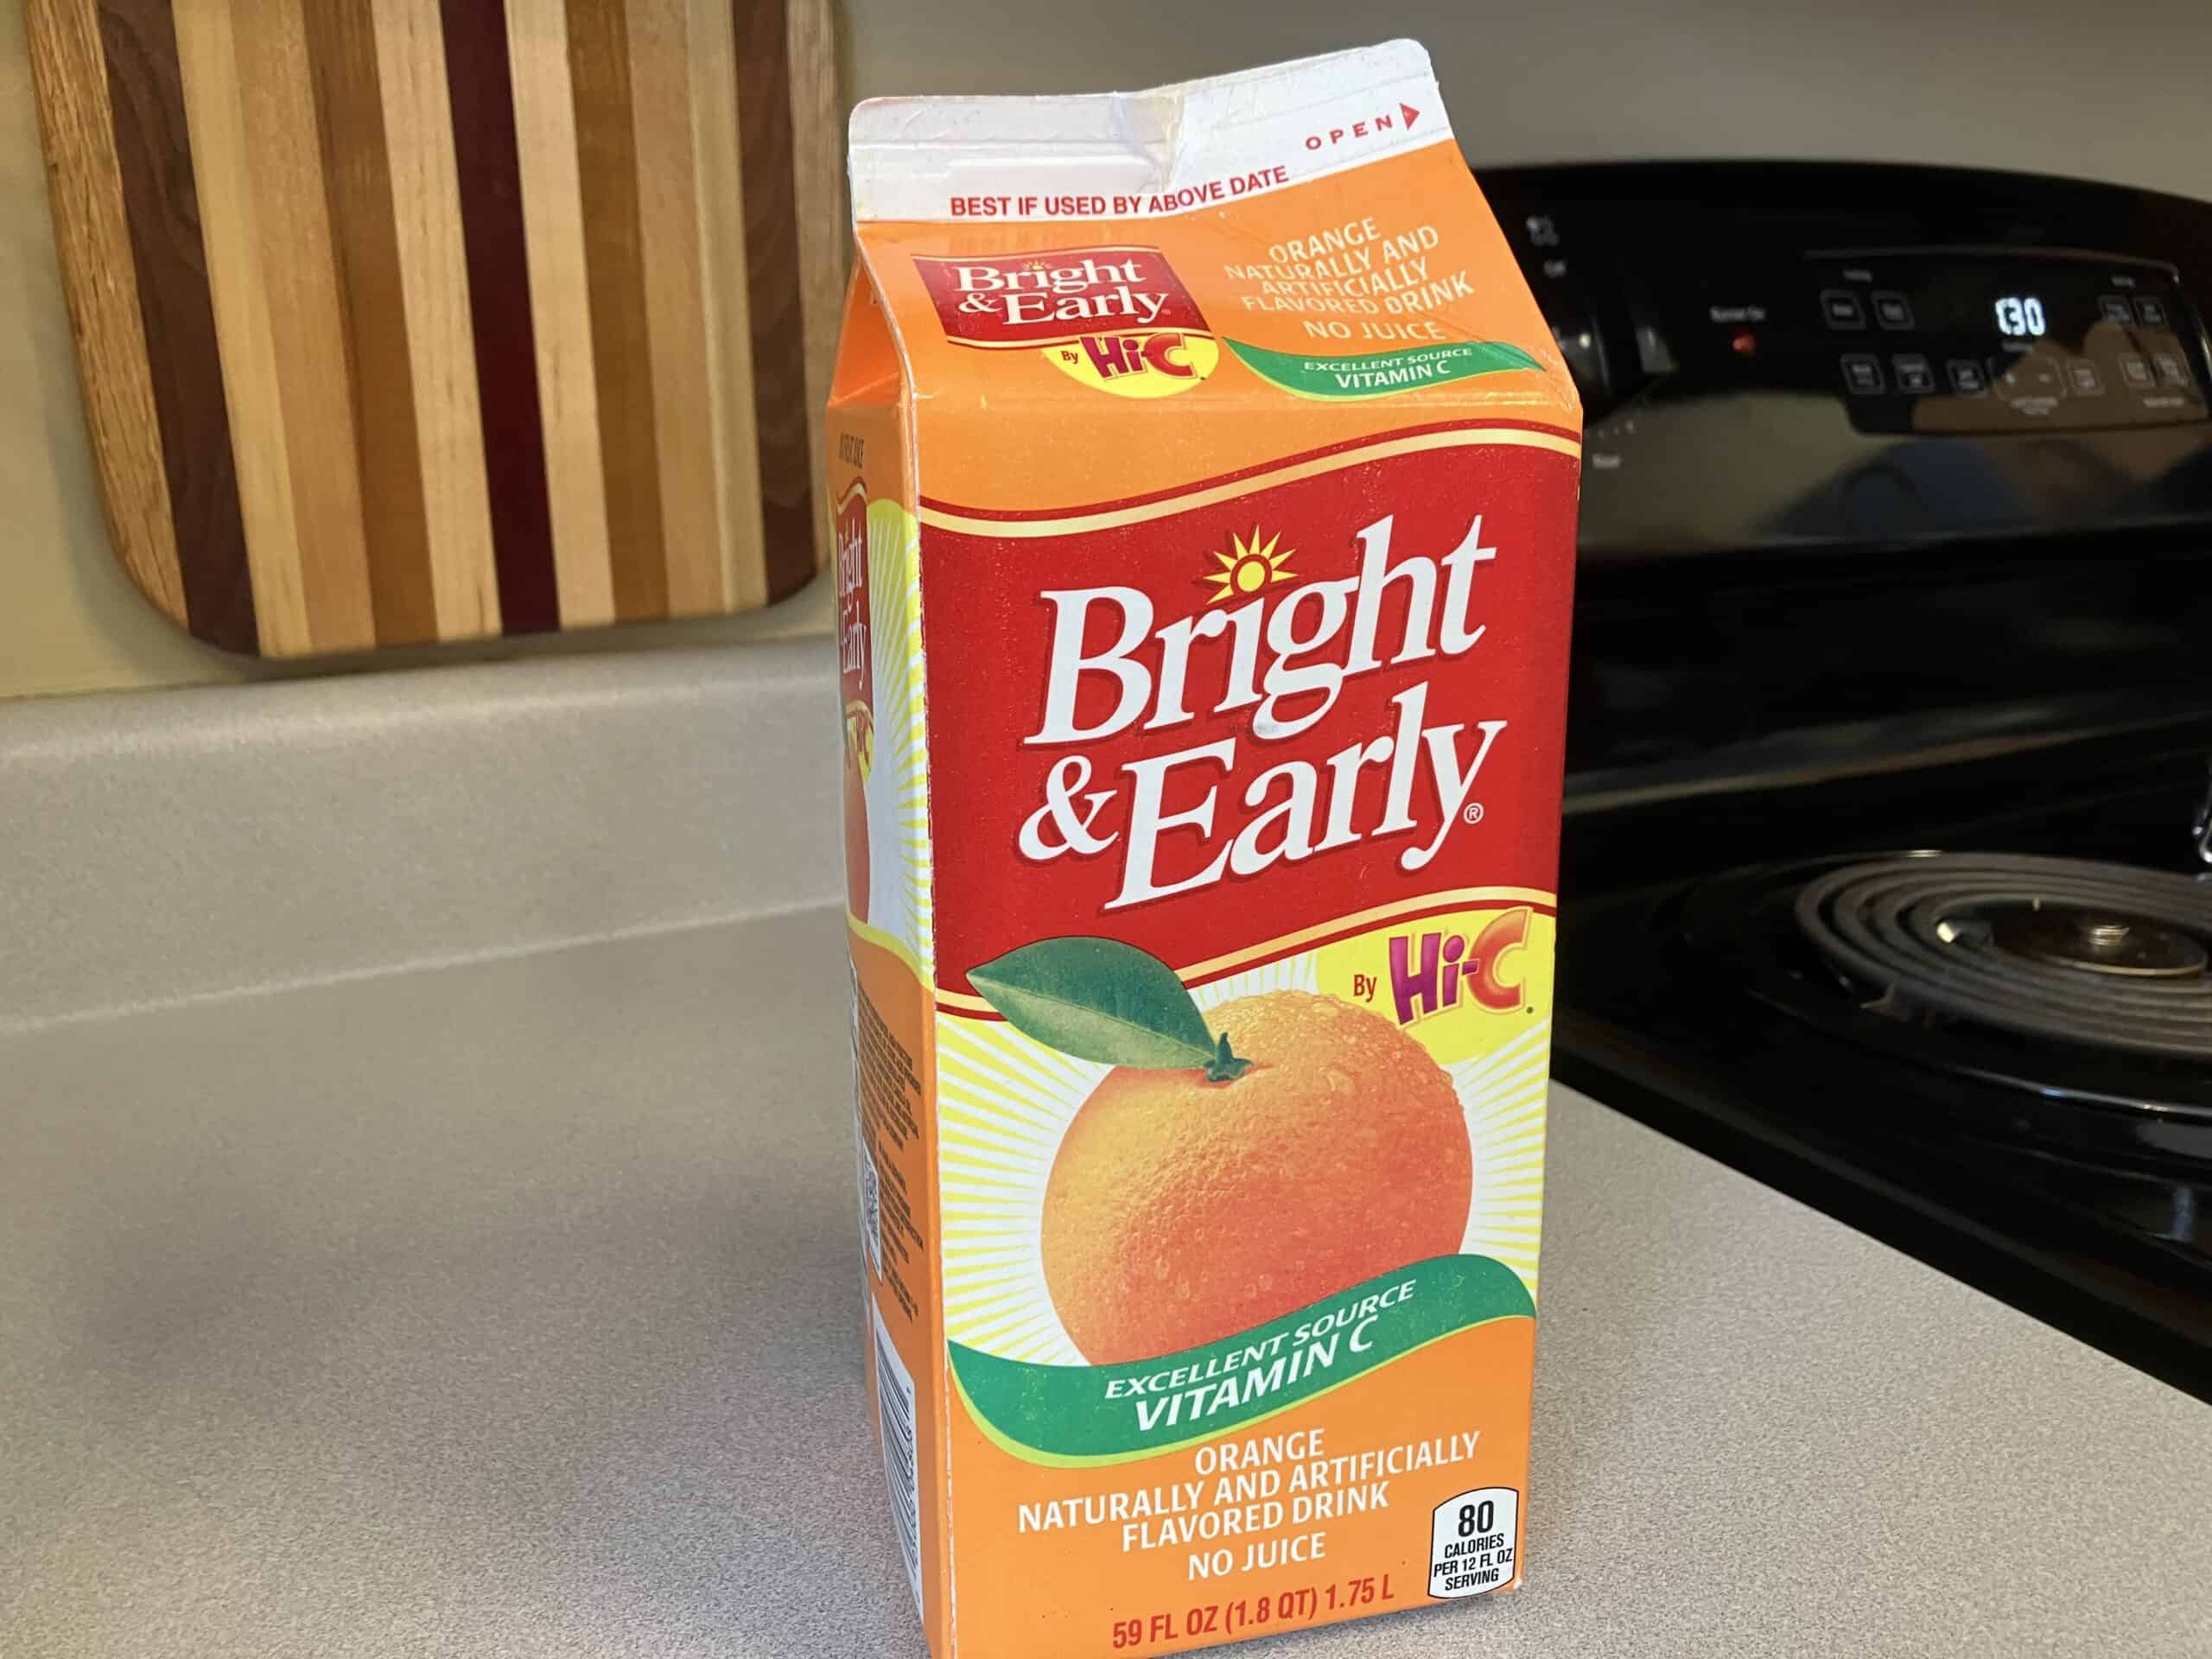 Bright & Early orange flavored beverage